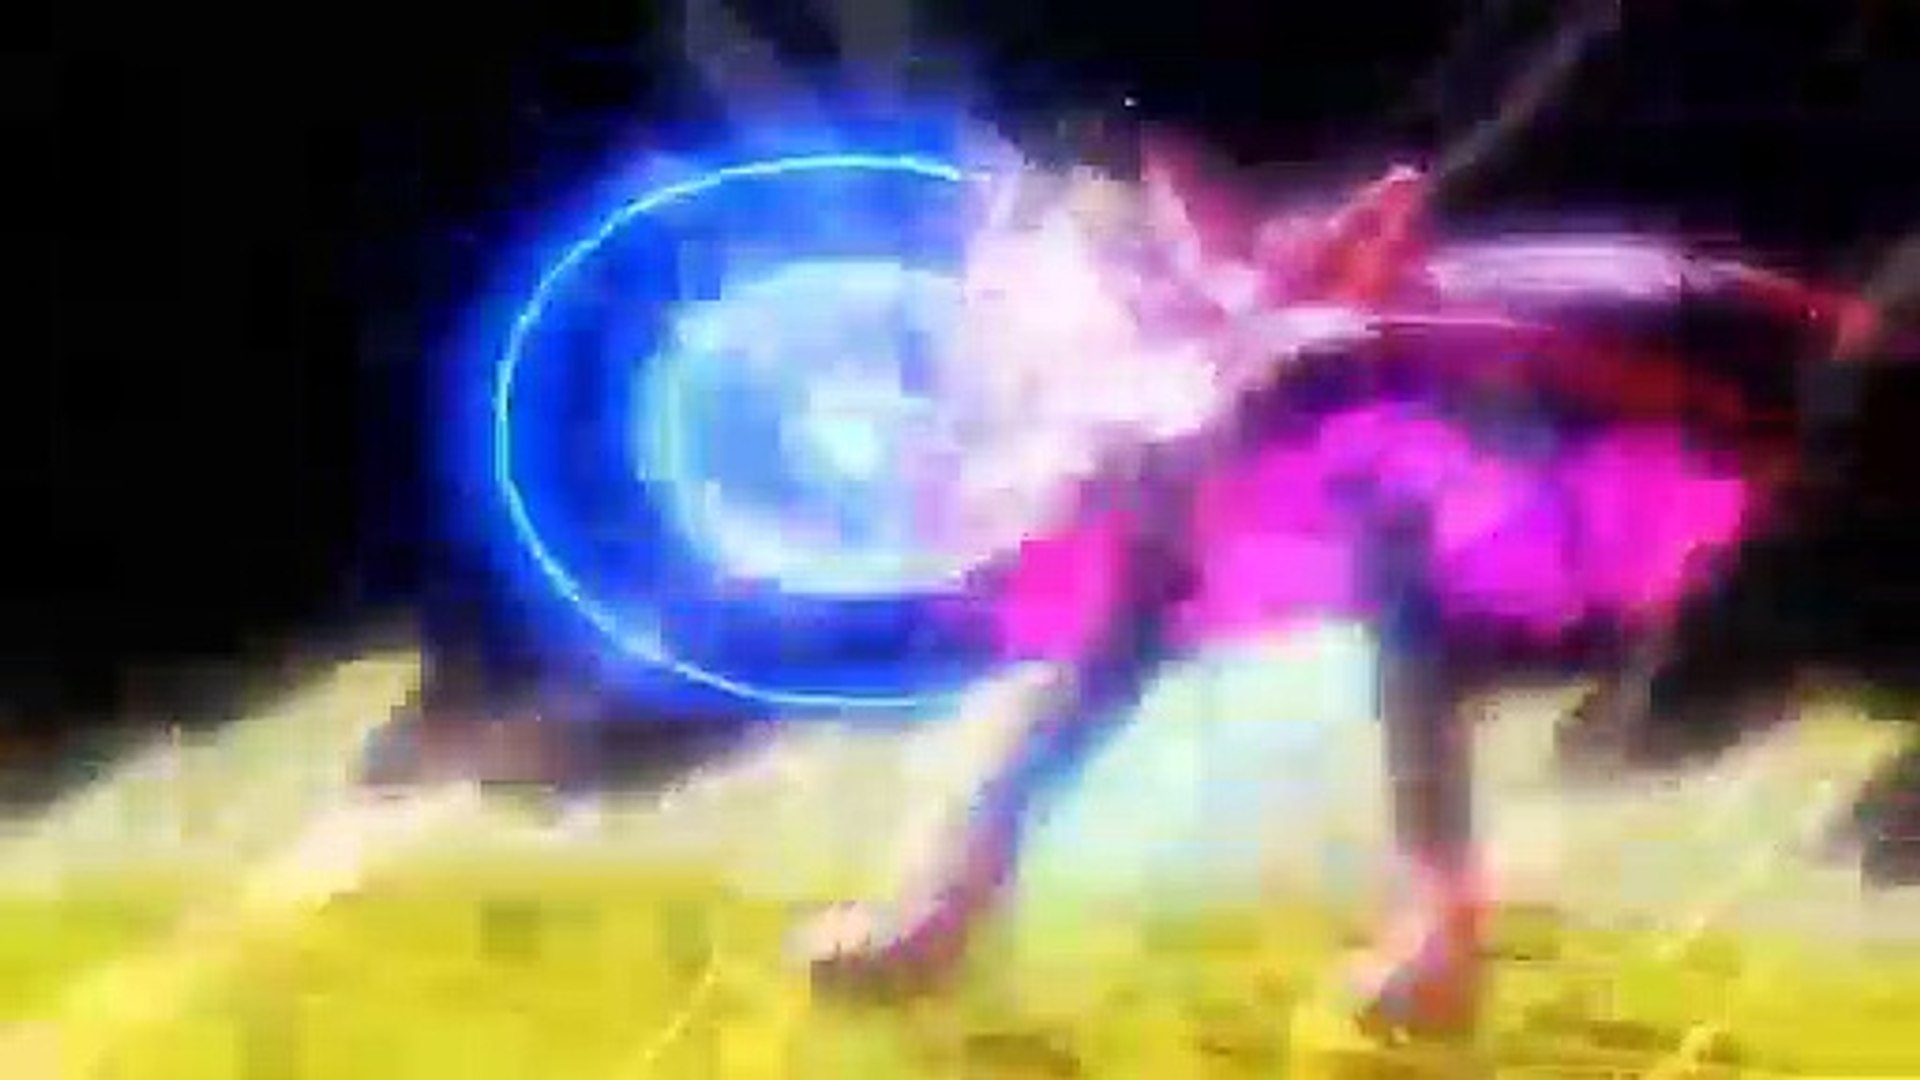 Anime Chick Story 1 : Cardcaptor Sakura online multiplayer - psx - Vidéo  Dailymotion